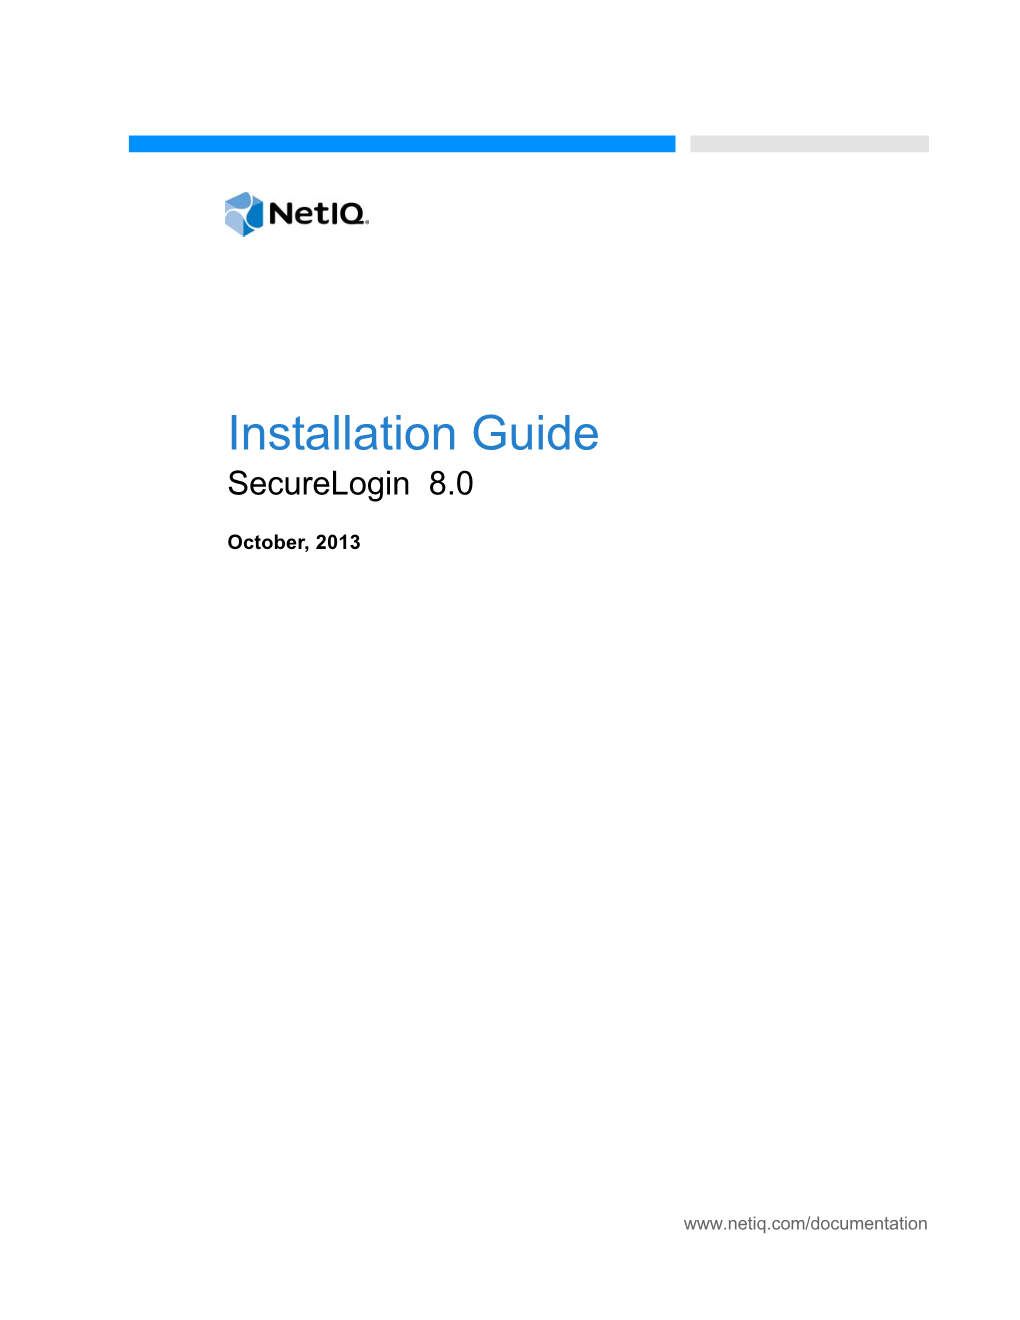 Netiq Securelogin Installation Guide 9 Installing, Configuring, and Deploying Desktop Automation Services 67 9.1 Installing Desktop Automation Services